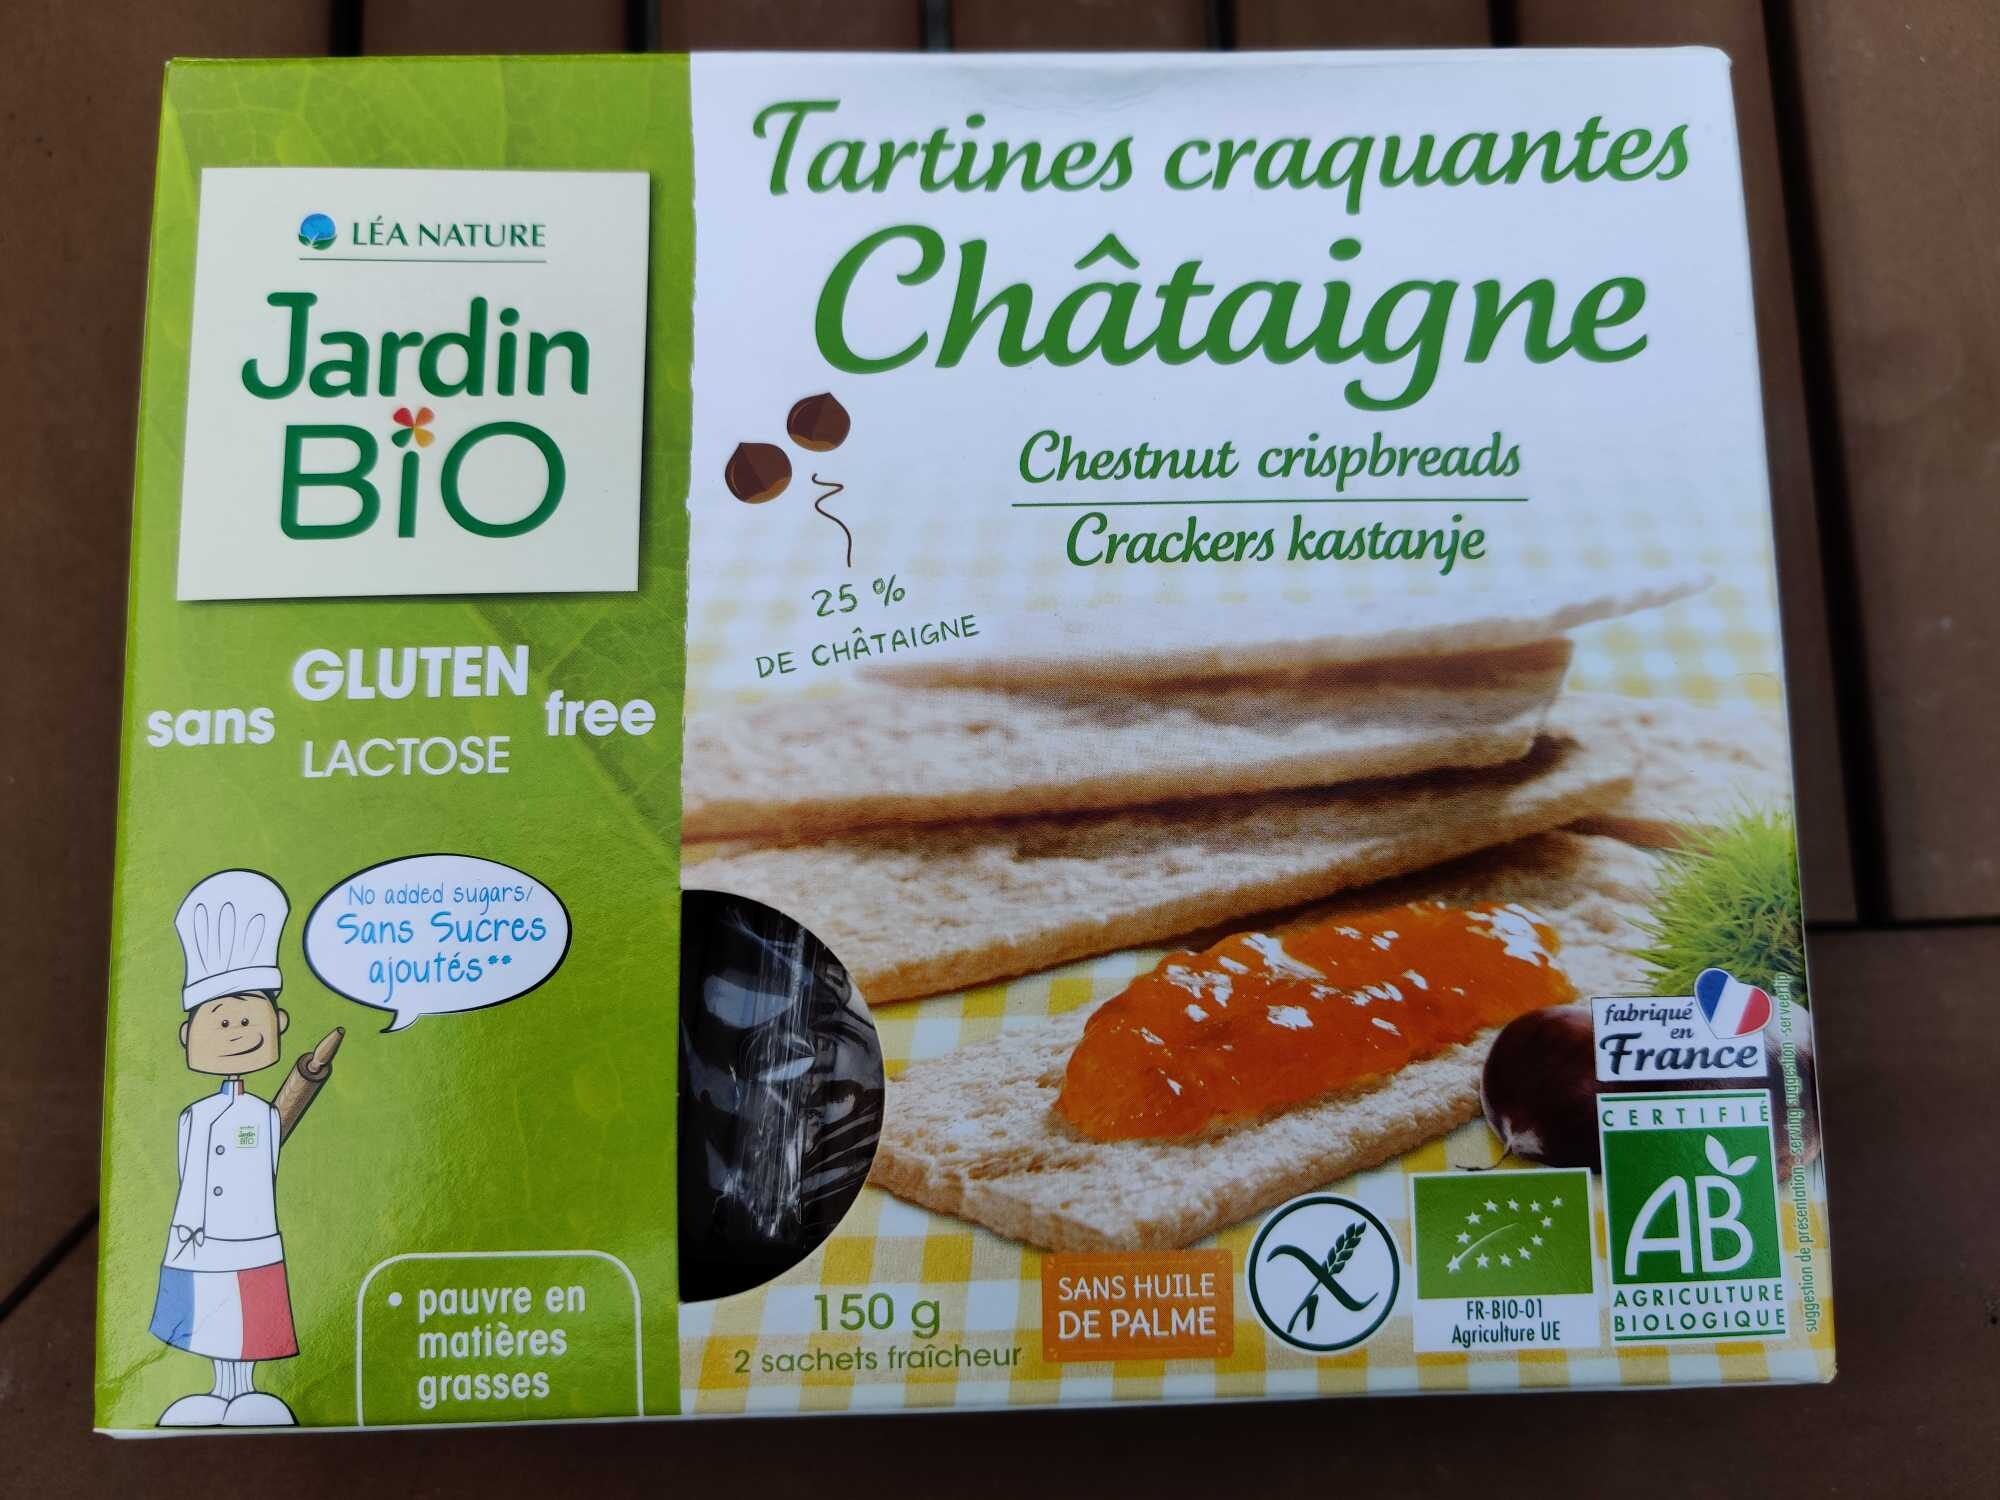 Tartines craquant es châtaigne - Produit - fr